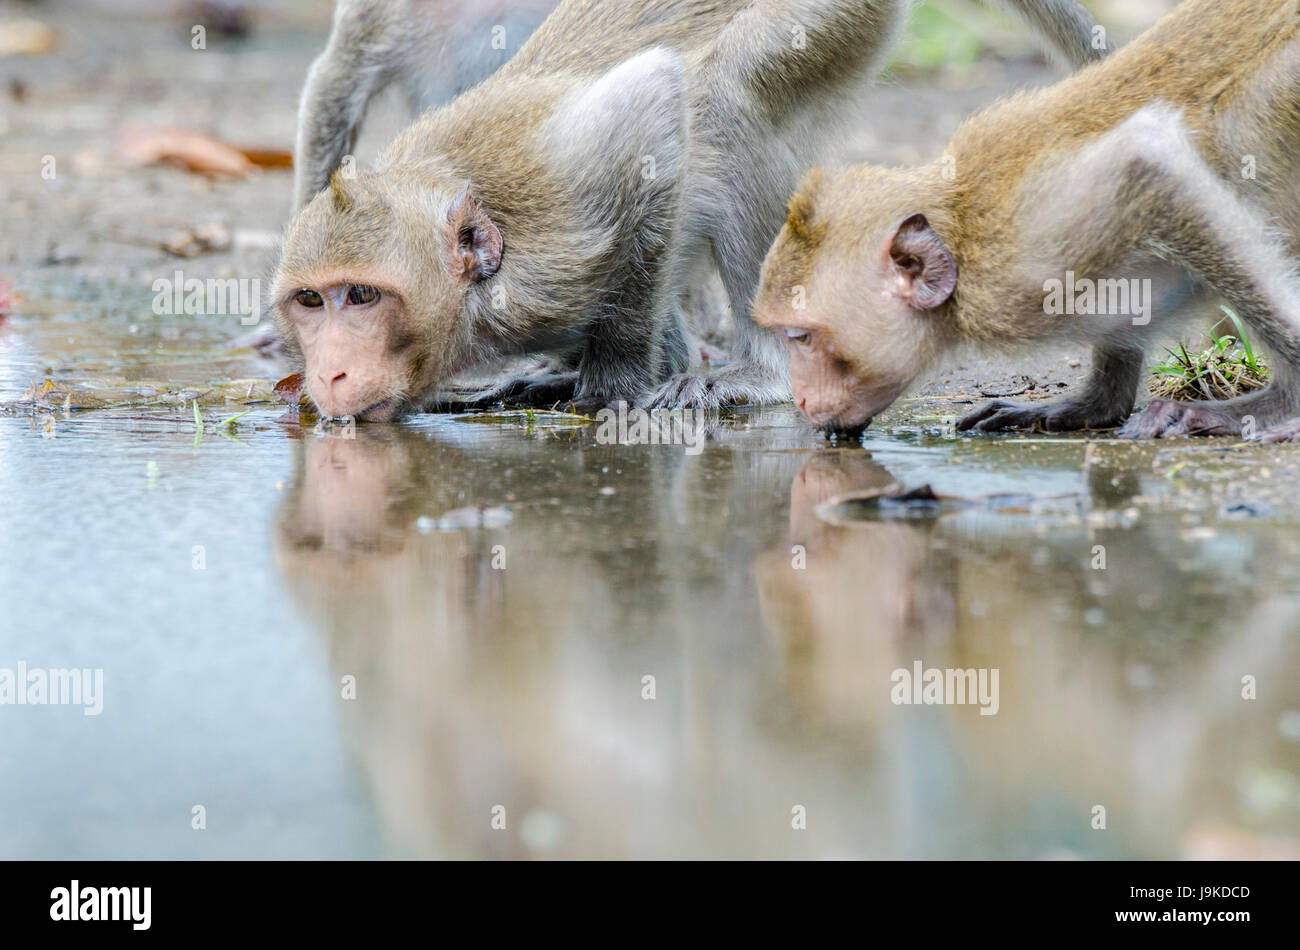 Una piccola truppa di Macachi mangiatori di granchi (Macaca fascicularis) o di lunga coda Macaque bevendo acqua piovana da una pozza in Thailandia Foto Stock